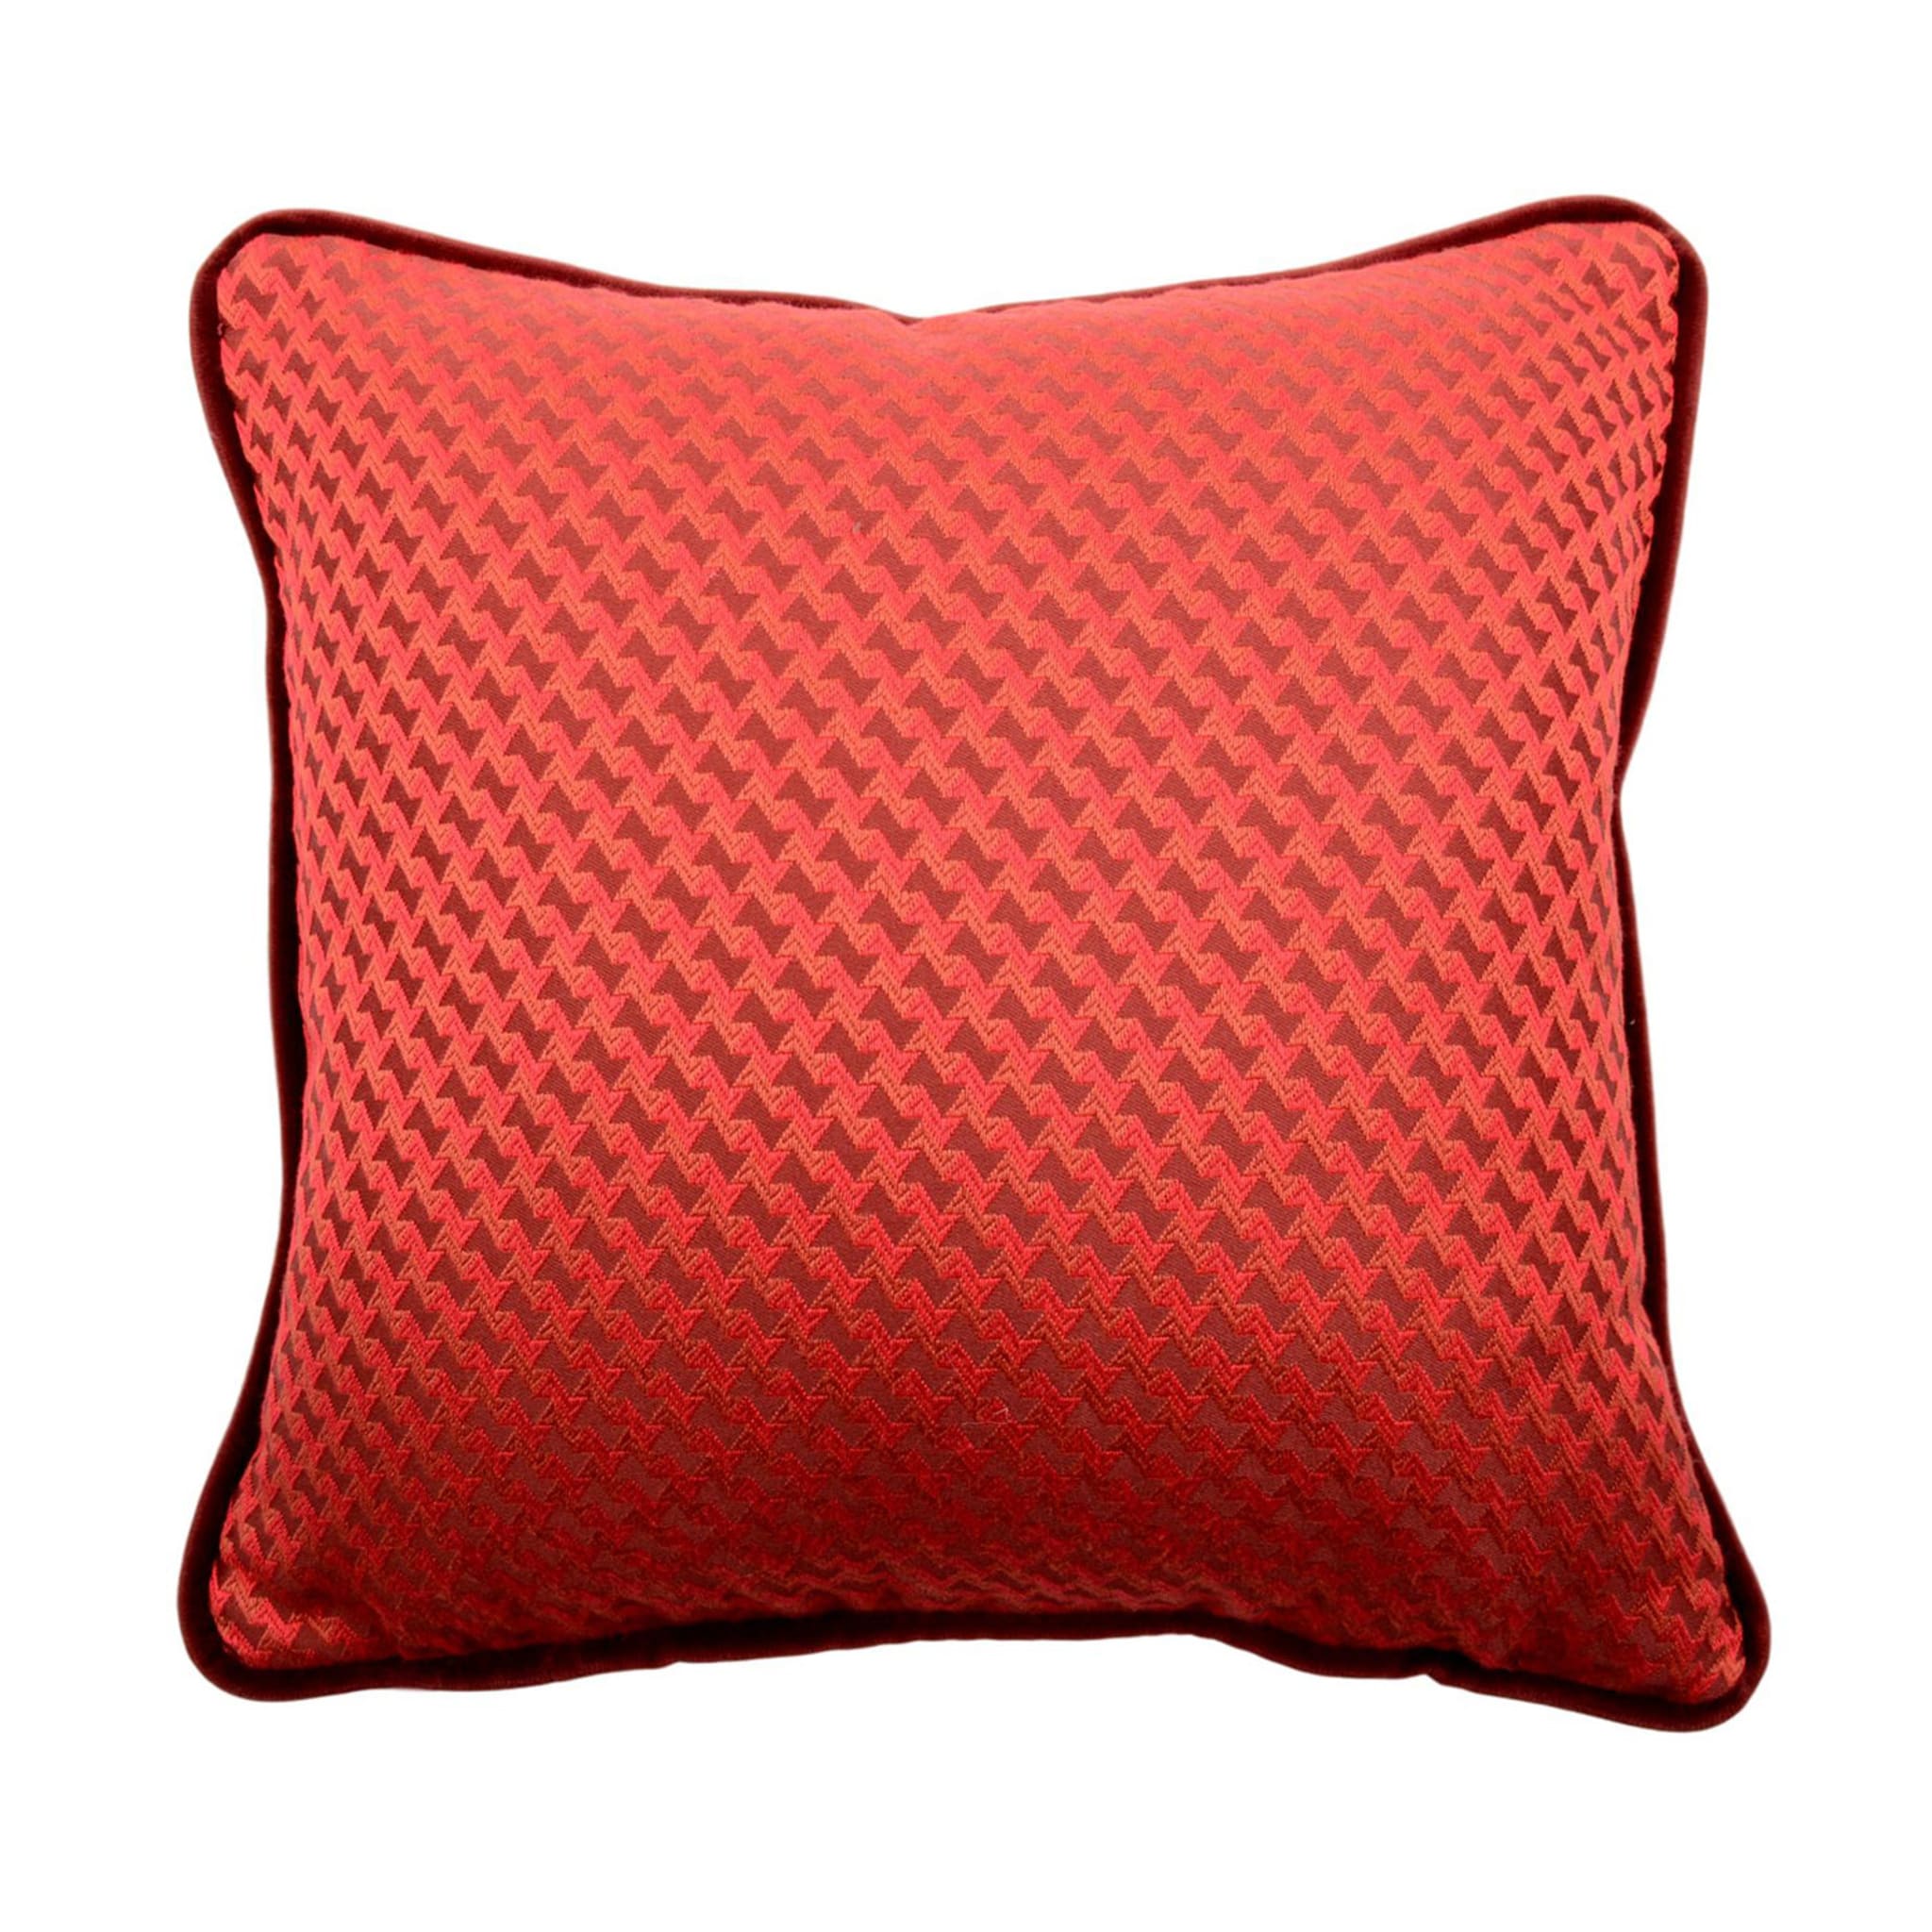 Coussin Carrè rouge en tissu jacquard à micro motifs - Vue principale